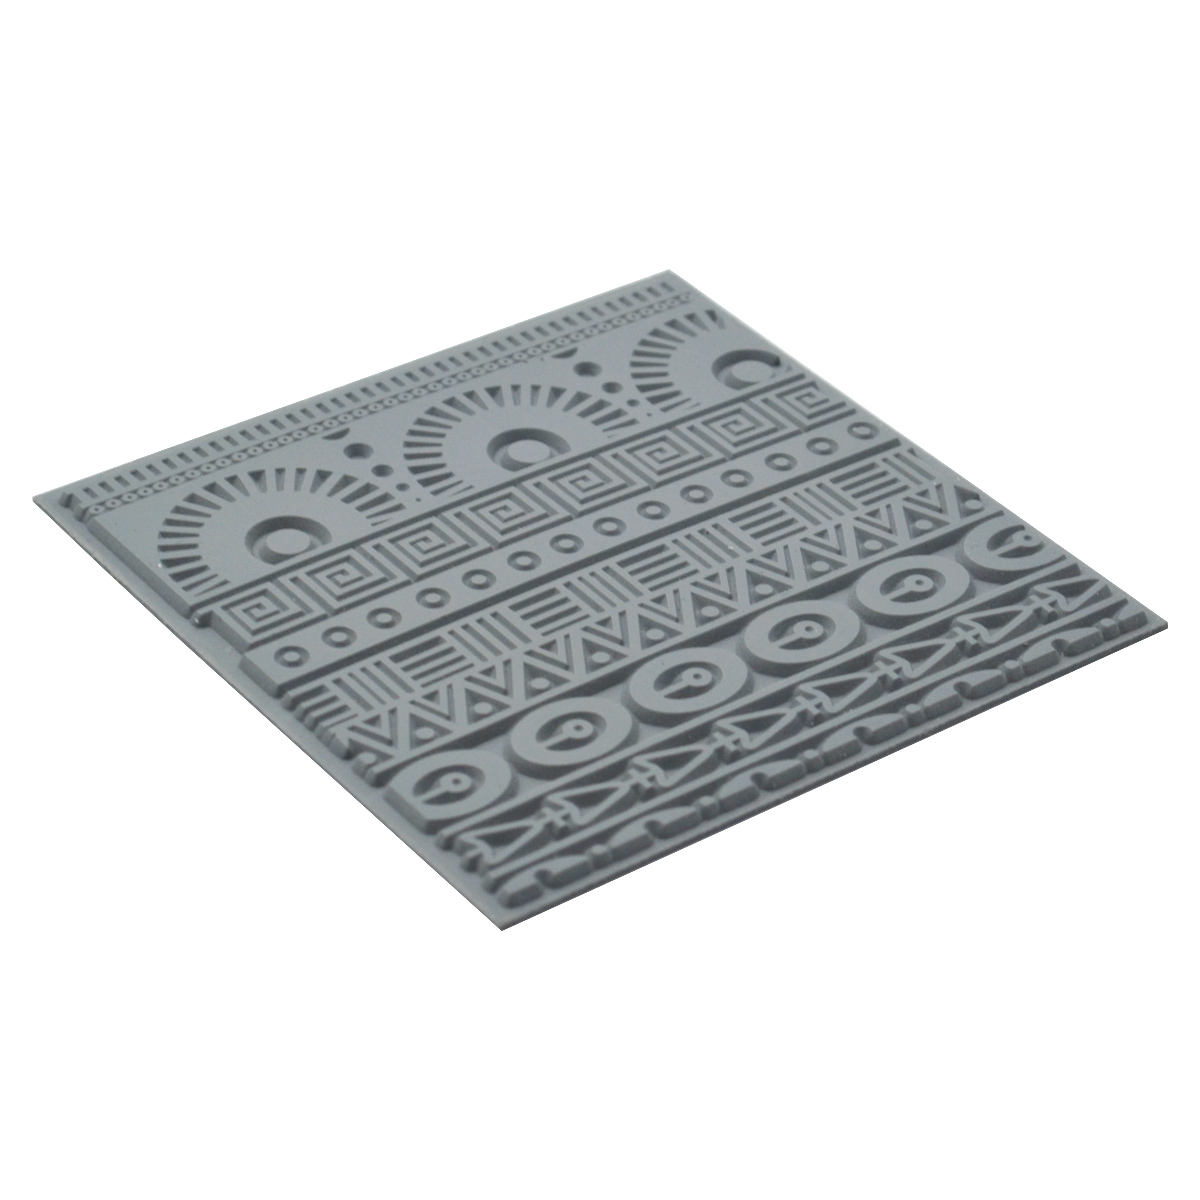 Текстура для пластики резиновая Геометрия, 9x9 см, арт. CE95019 Cernit